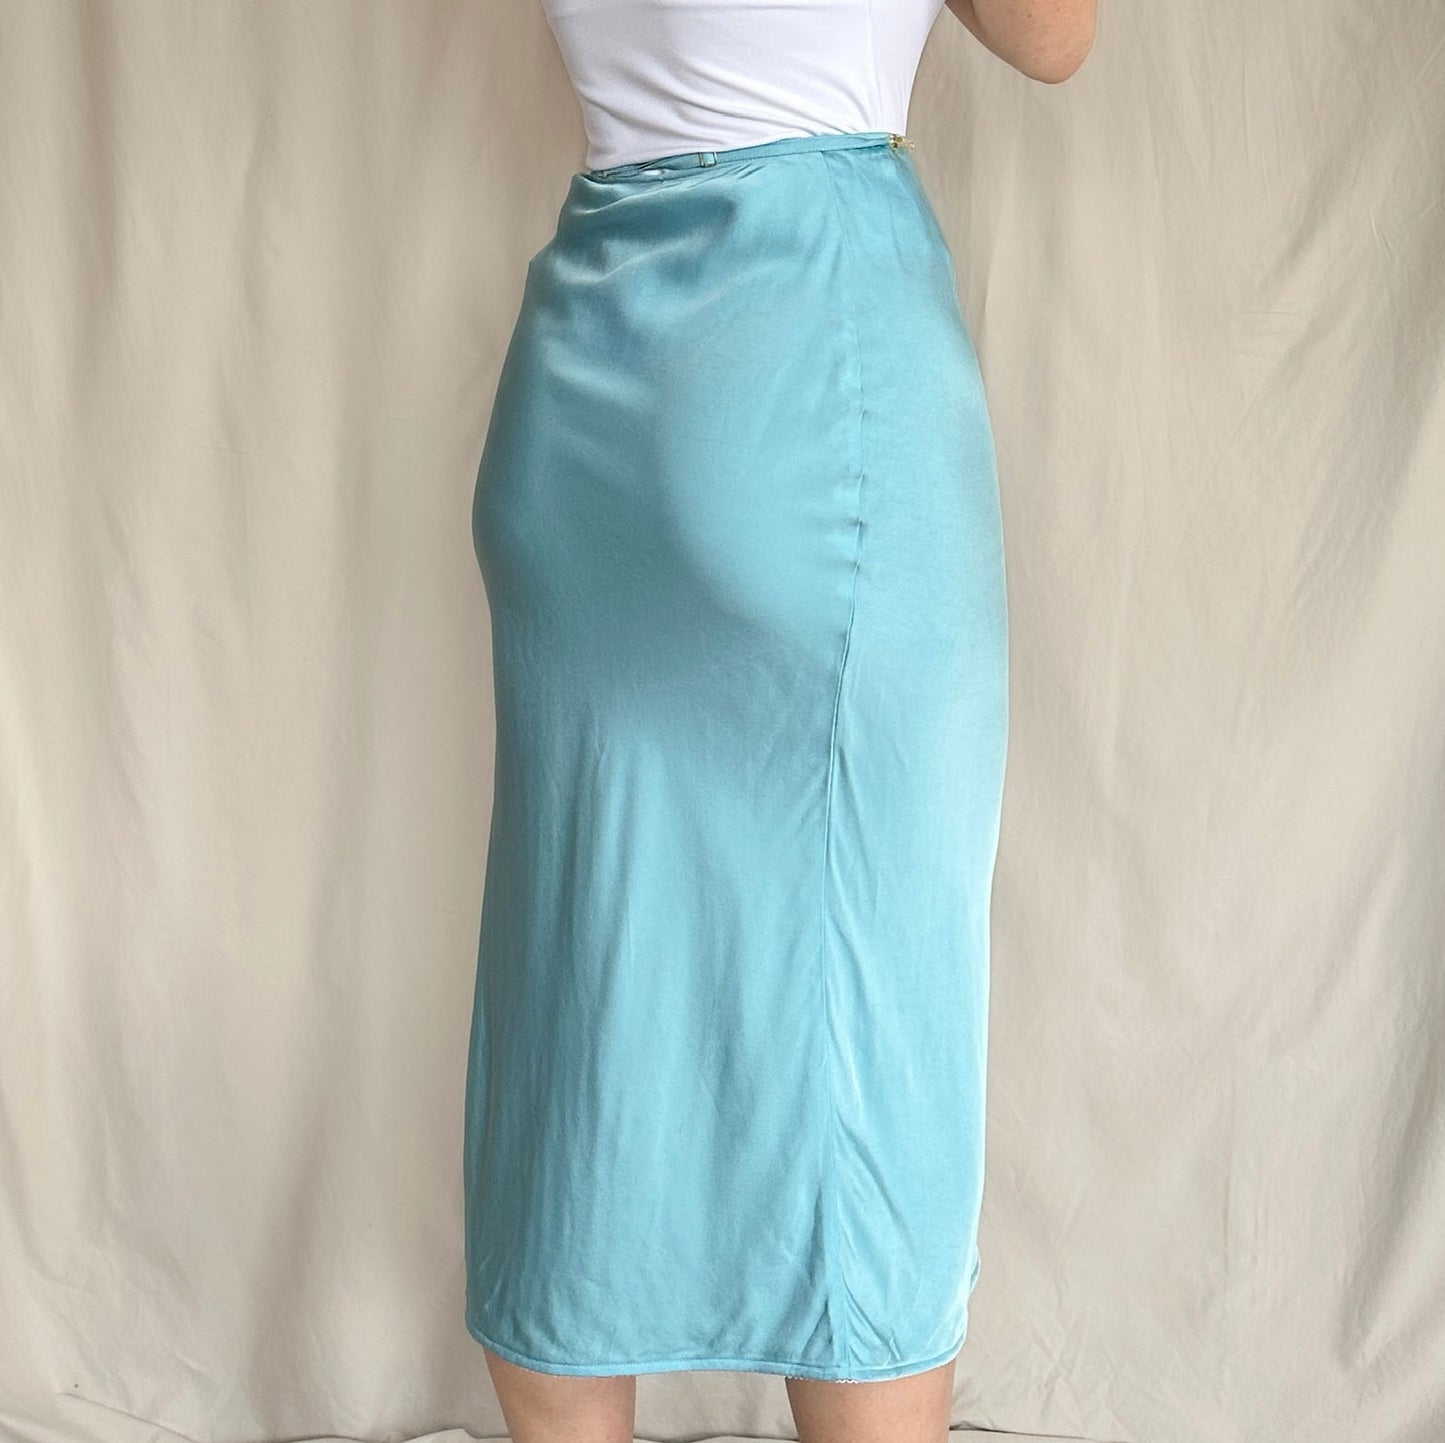 Brand New Jacquemus Torquiose La Jupe Notte Satin Skirt Size 36 US 4